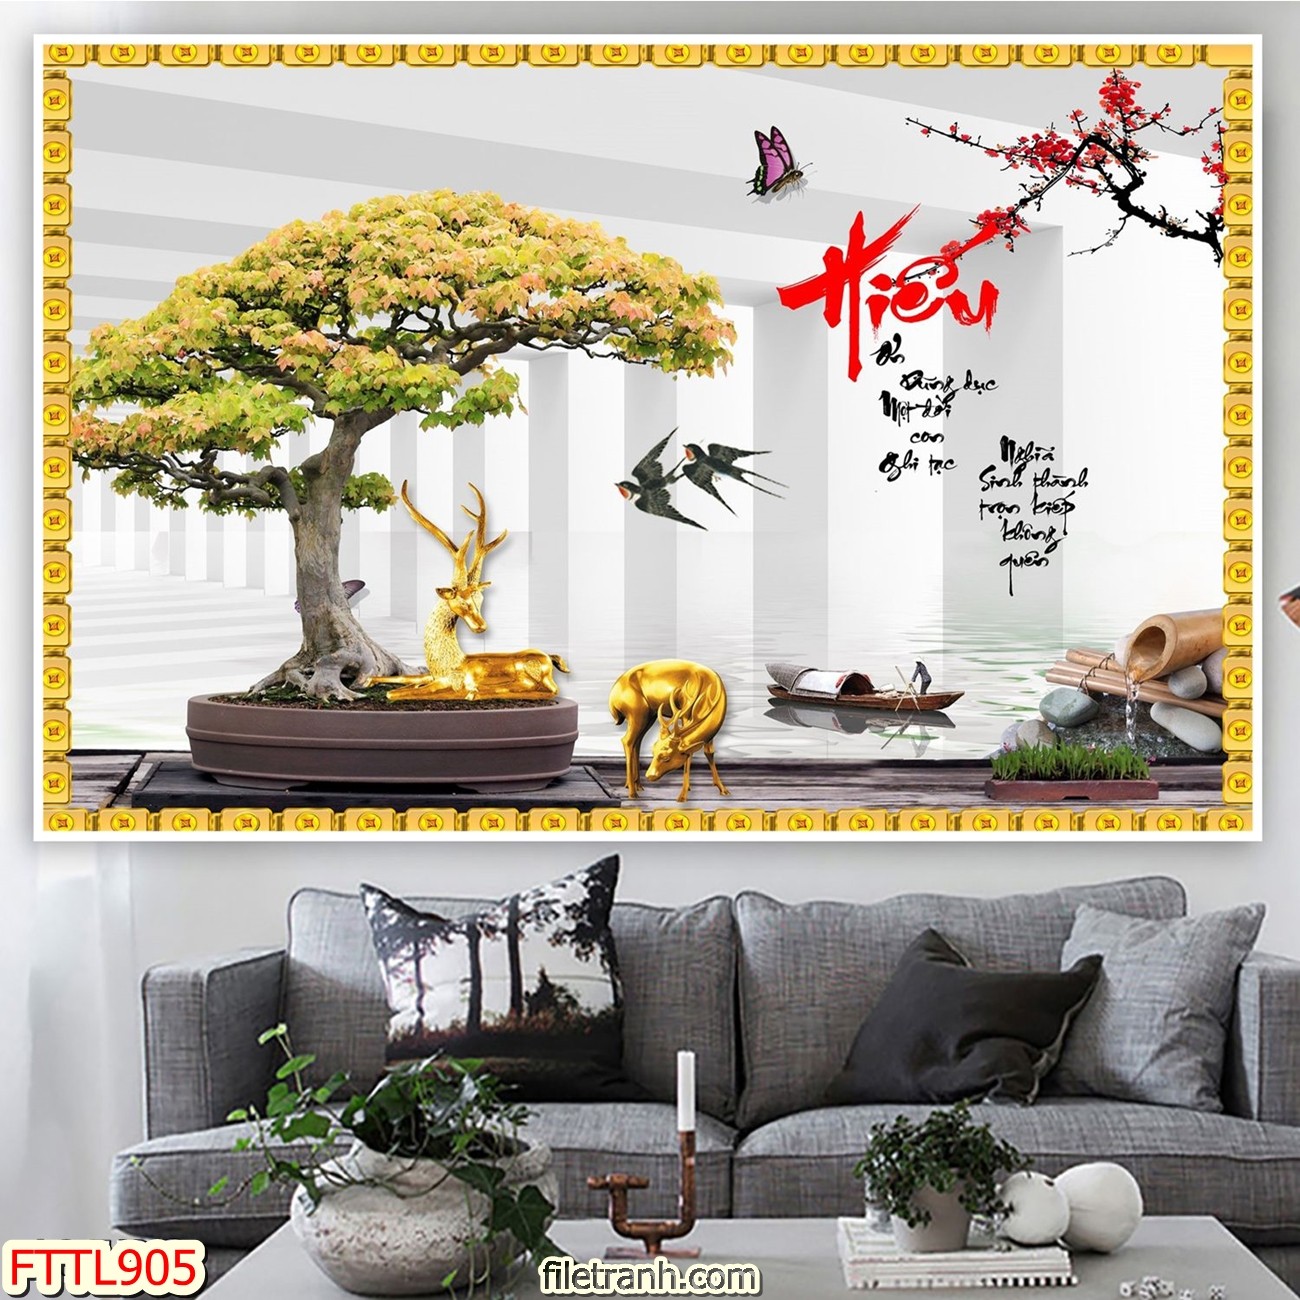 http://filetranh.com/file-tranh-chau-mai-bonsai/file-tranh-chau-mai-bonsai-fttl905.html